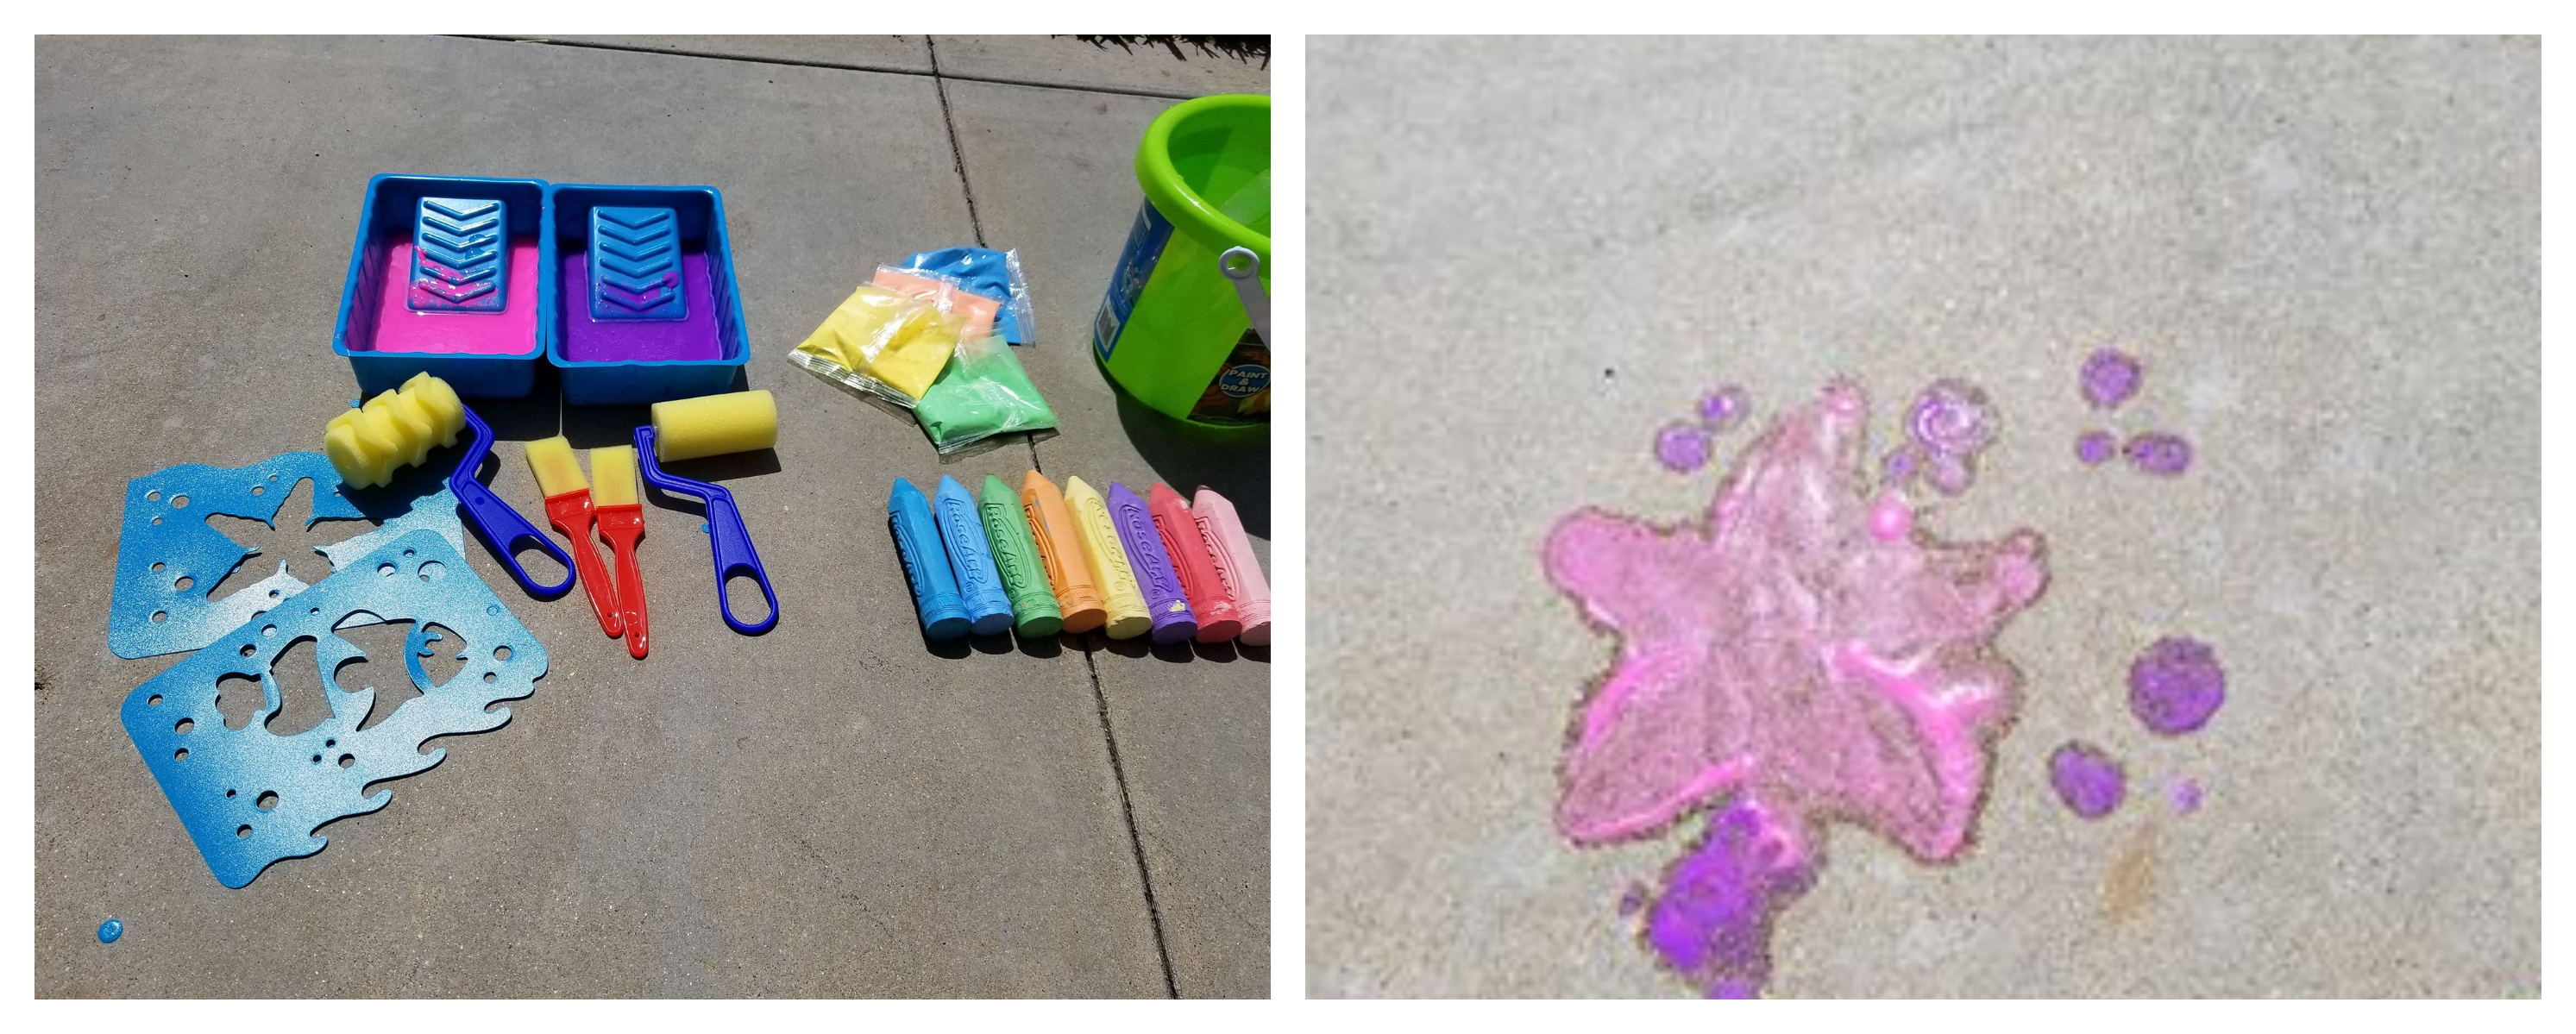 Sidewalk Chalk Paint Set - PEN BRUSH ROLLER Washable